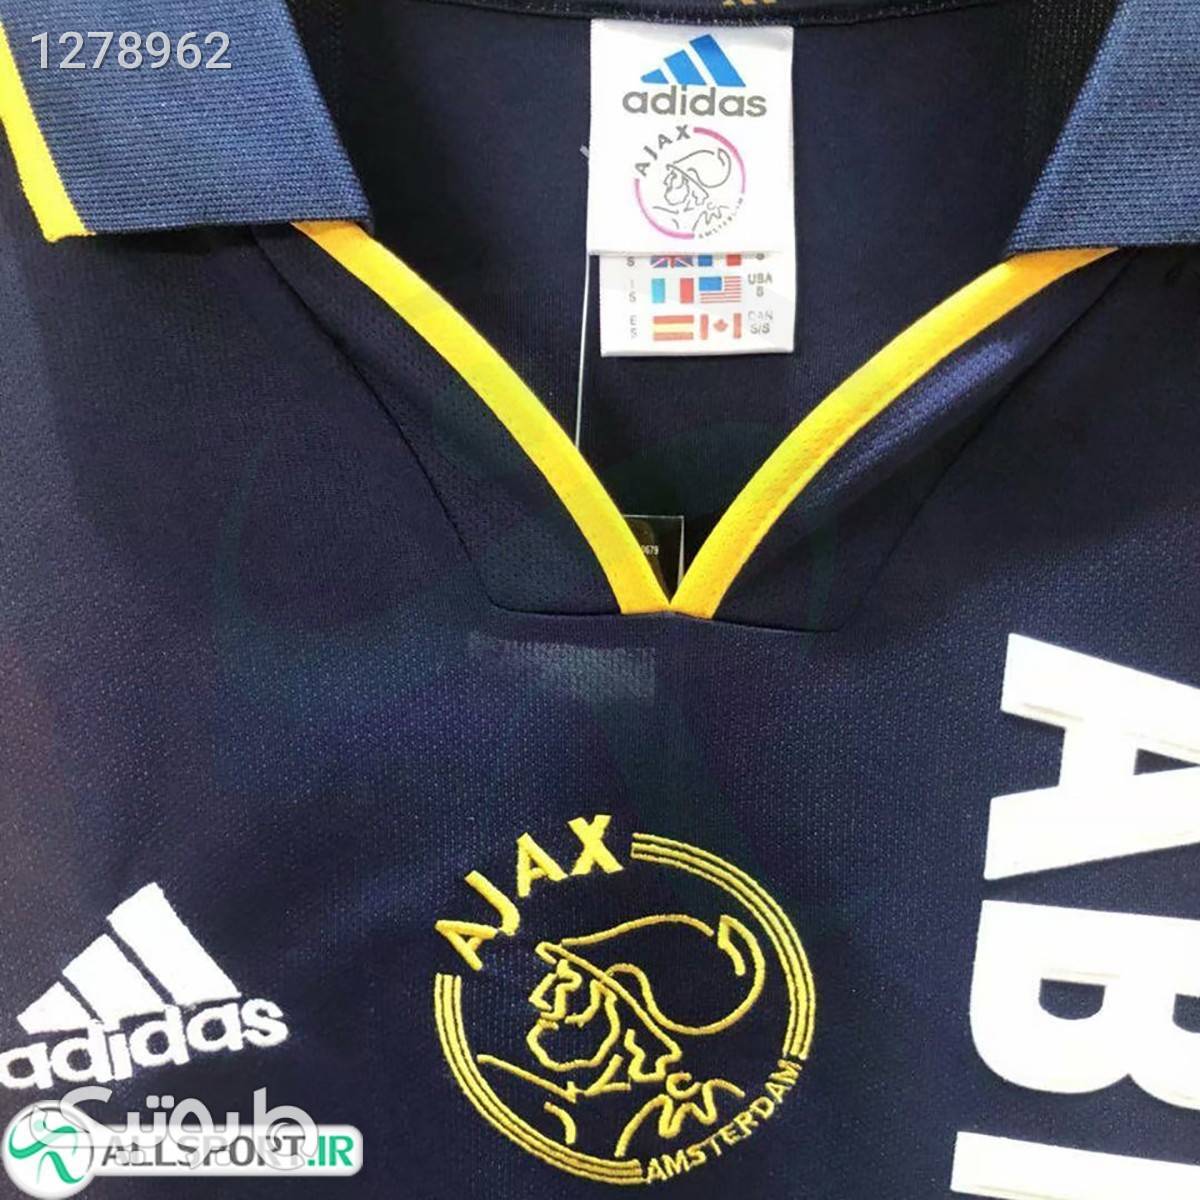 پیراهن کلاسیک آژاکس Ajax 20002001 Classic Soccer Jersey